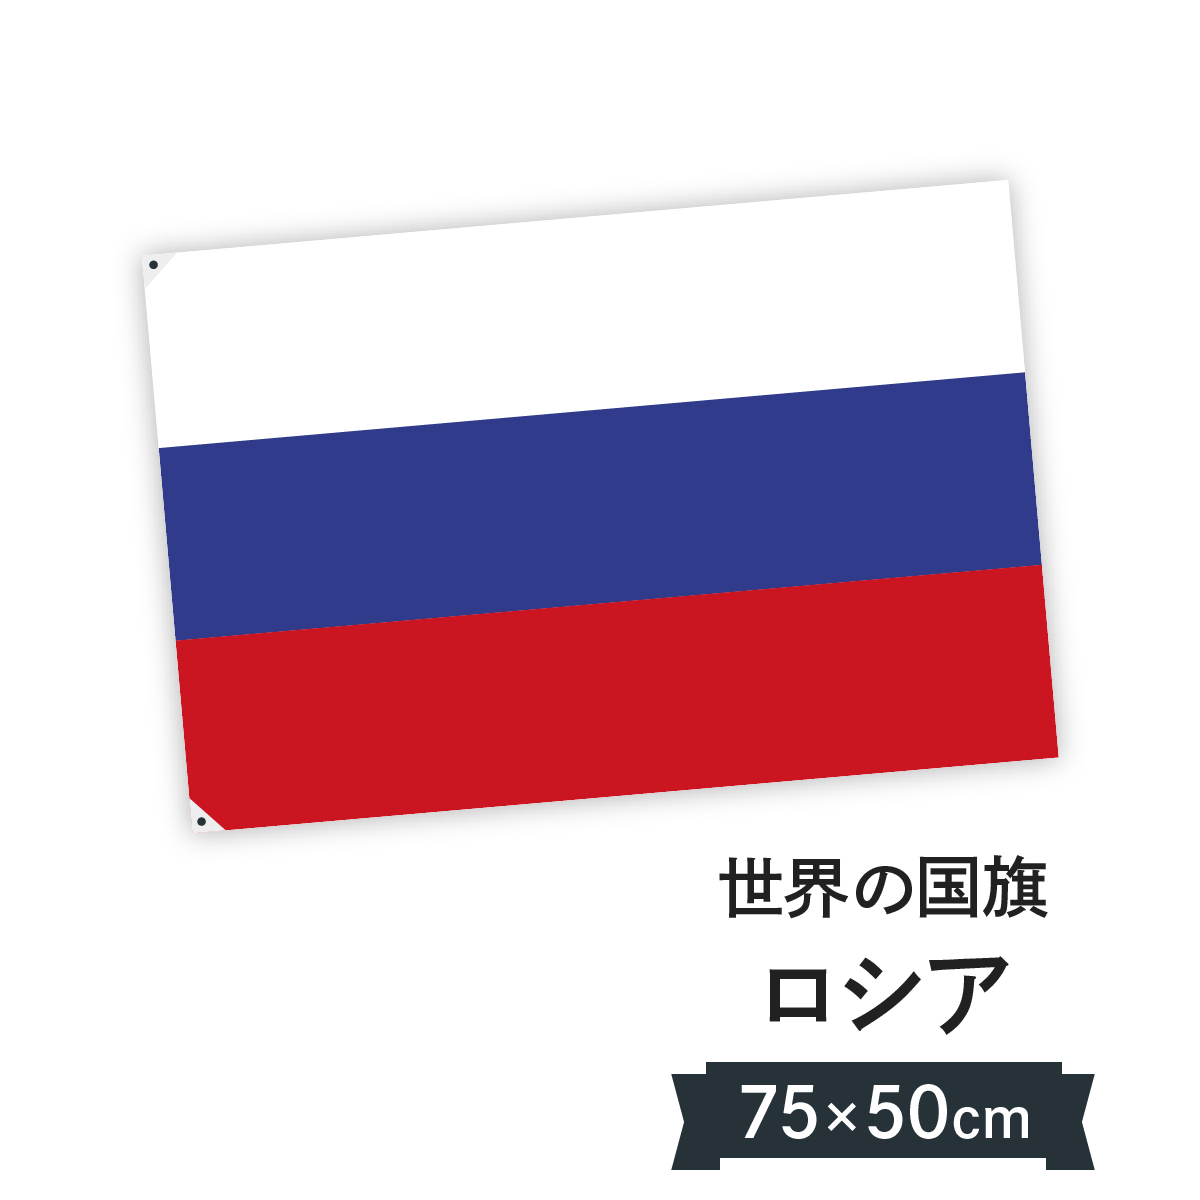 NEW お店に飾ればお手軽異国風演出 ロシア連邦 国旗 新着セール H50cm W75m